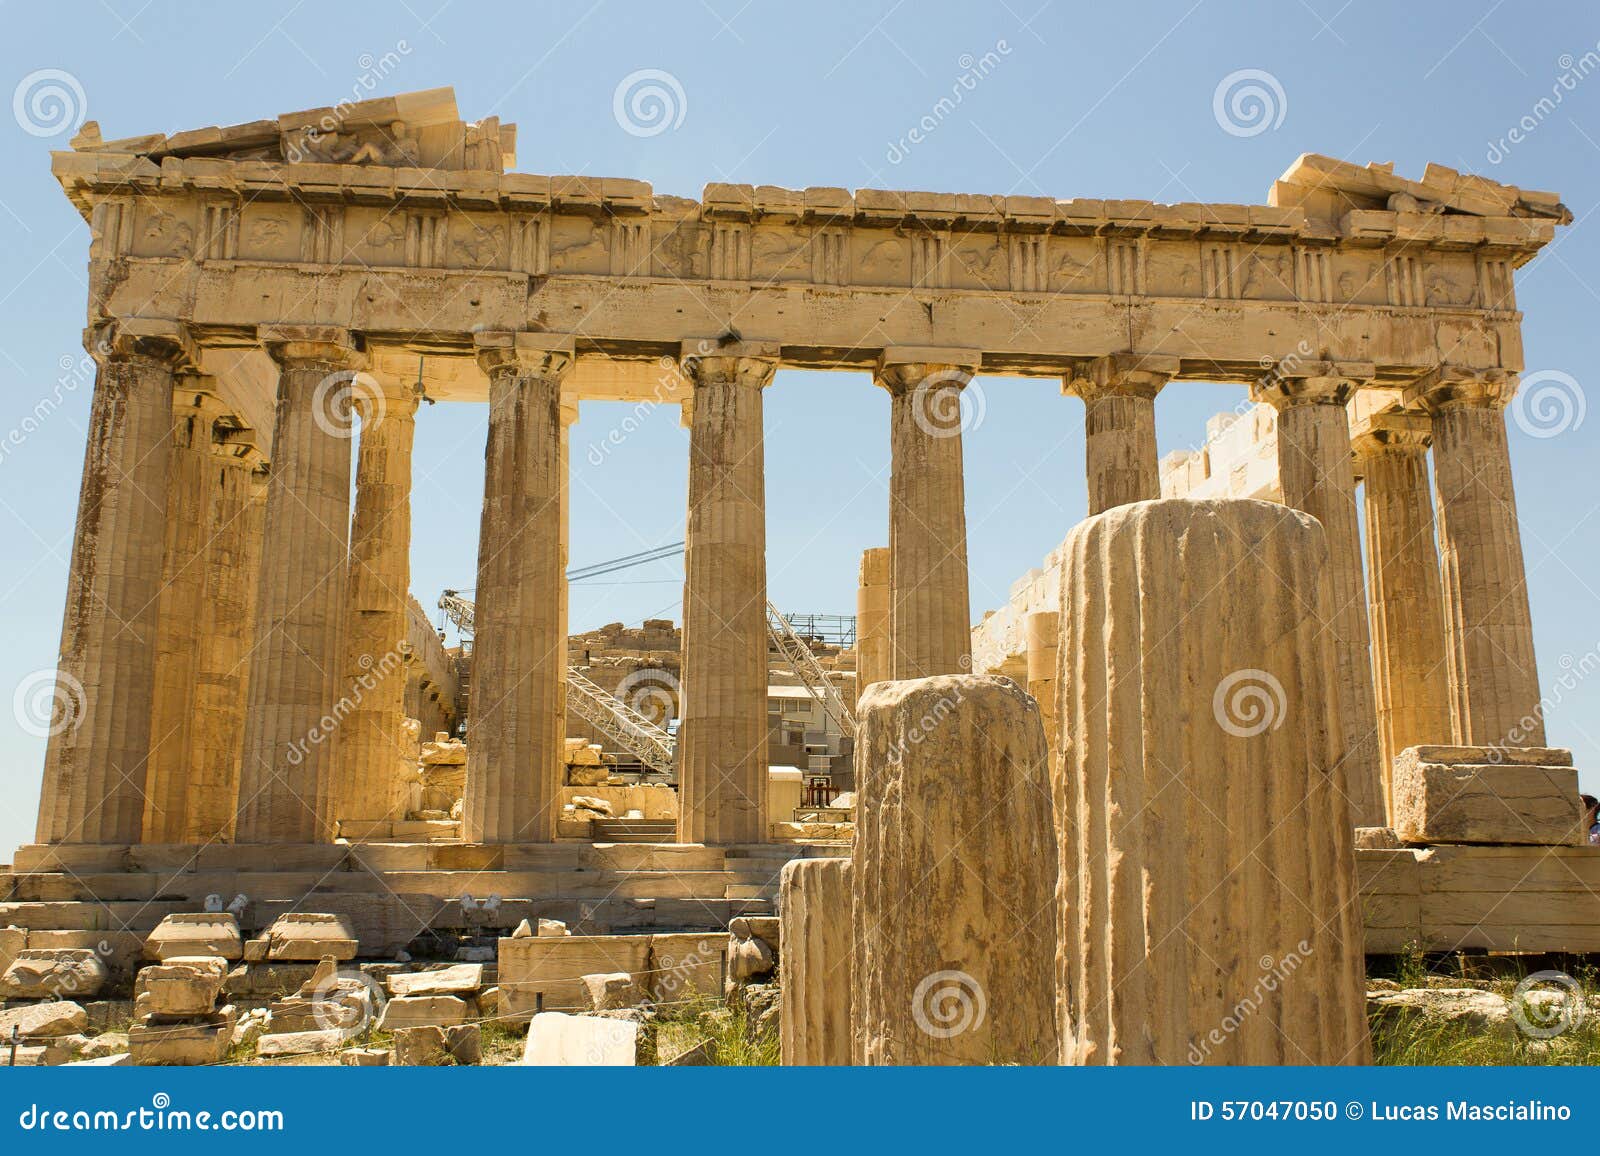 atenas greece acropolis view